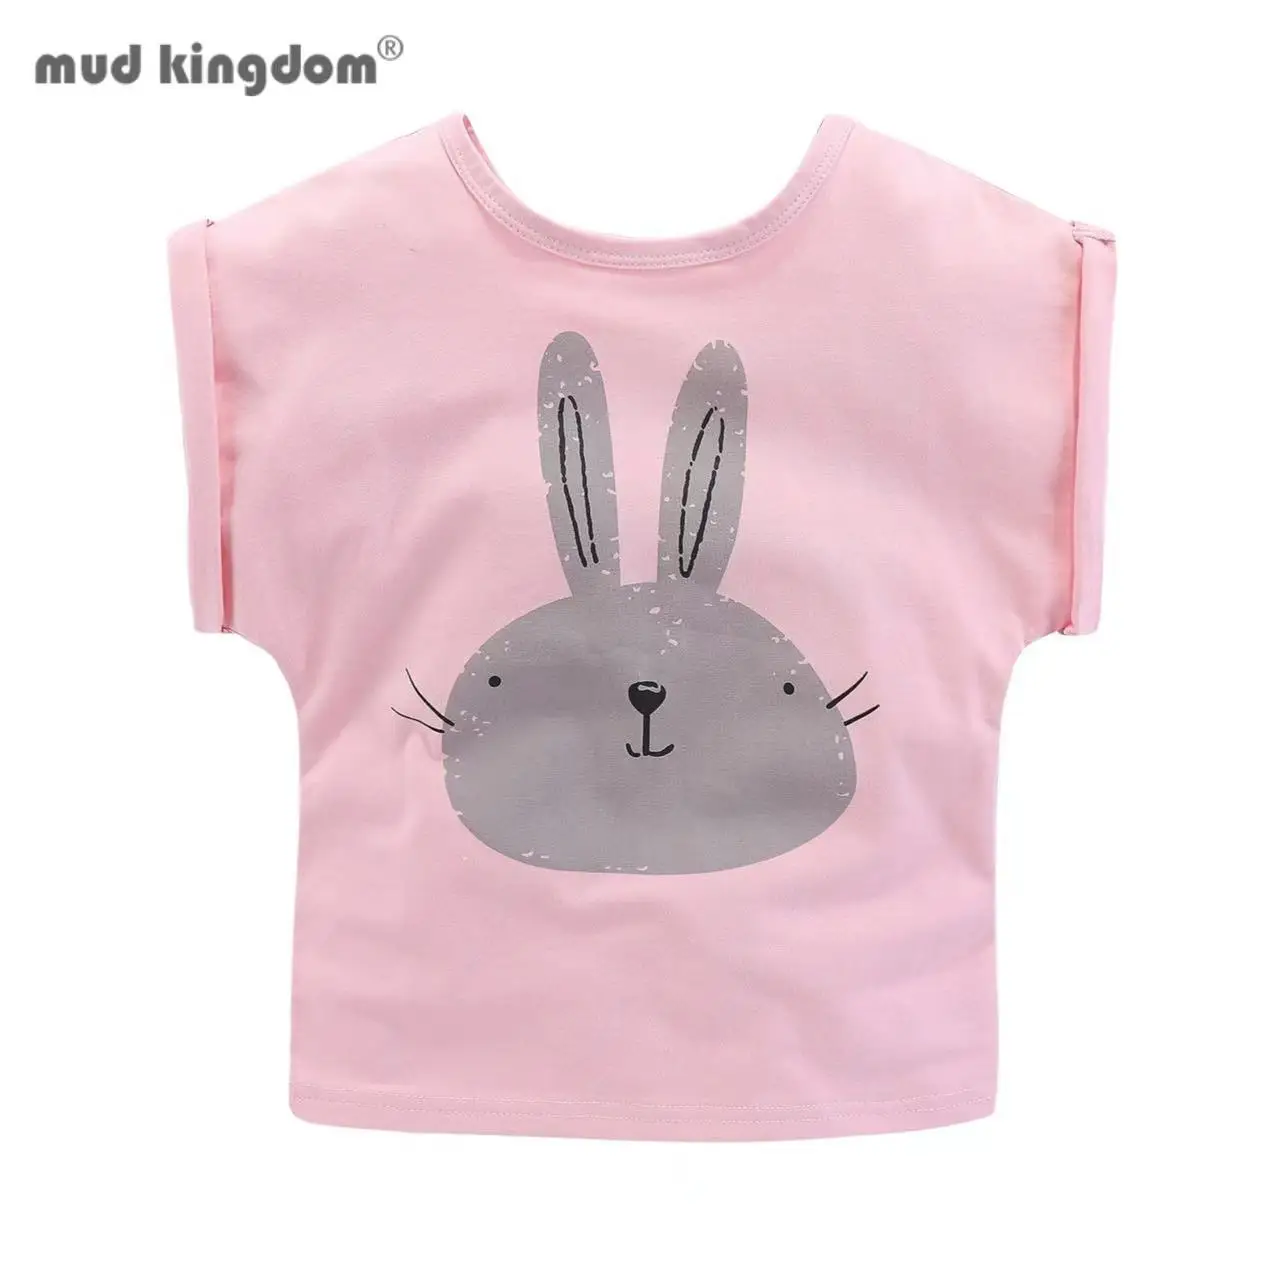 

Mudkingdom Cute Girls Tshirt Short Sleeve Tees for Kids Summer T-Shirt Rabbit Bunny Printing Clothes Cotton Casual Tops